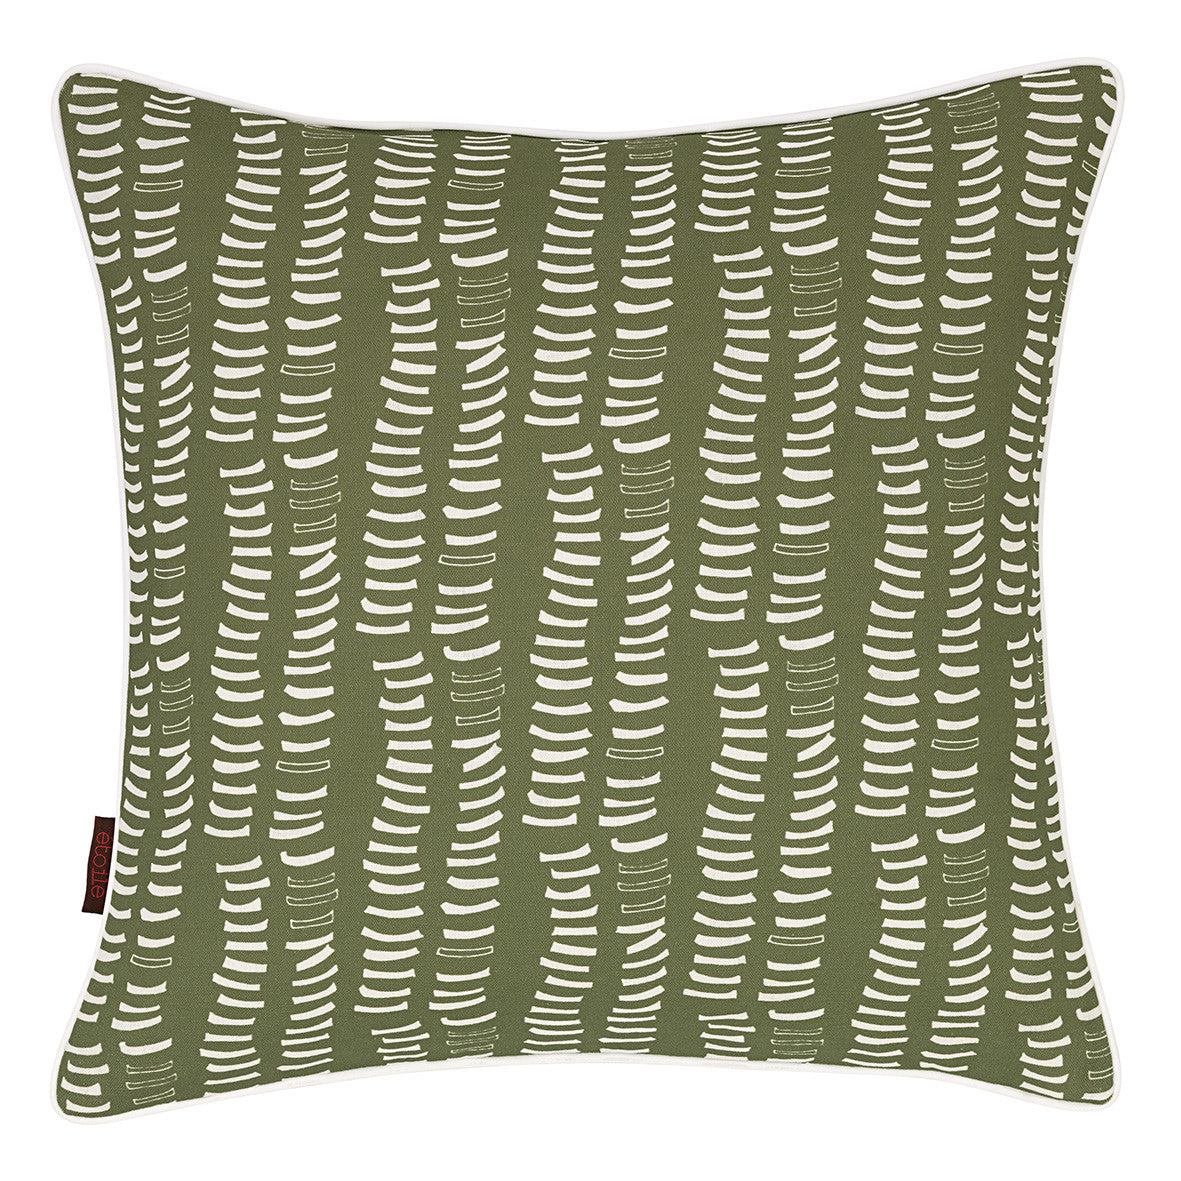 Graphic Adams Rib Pattern Linen Union Printed Cushion in Light Avocado Green